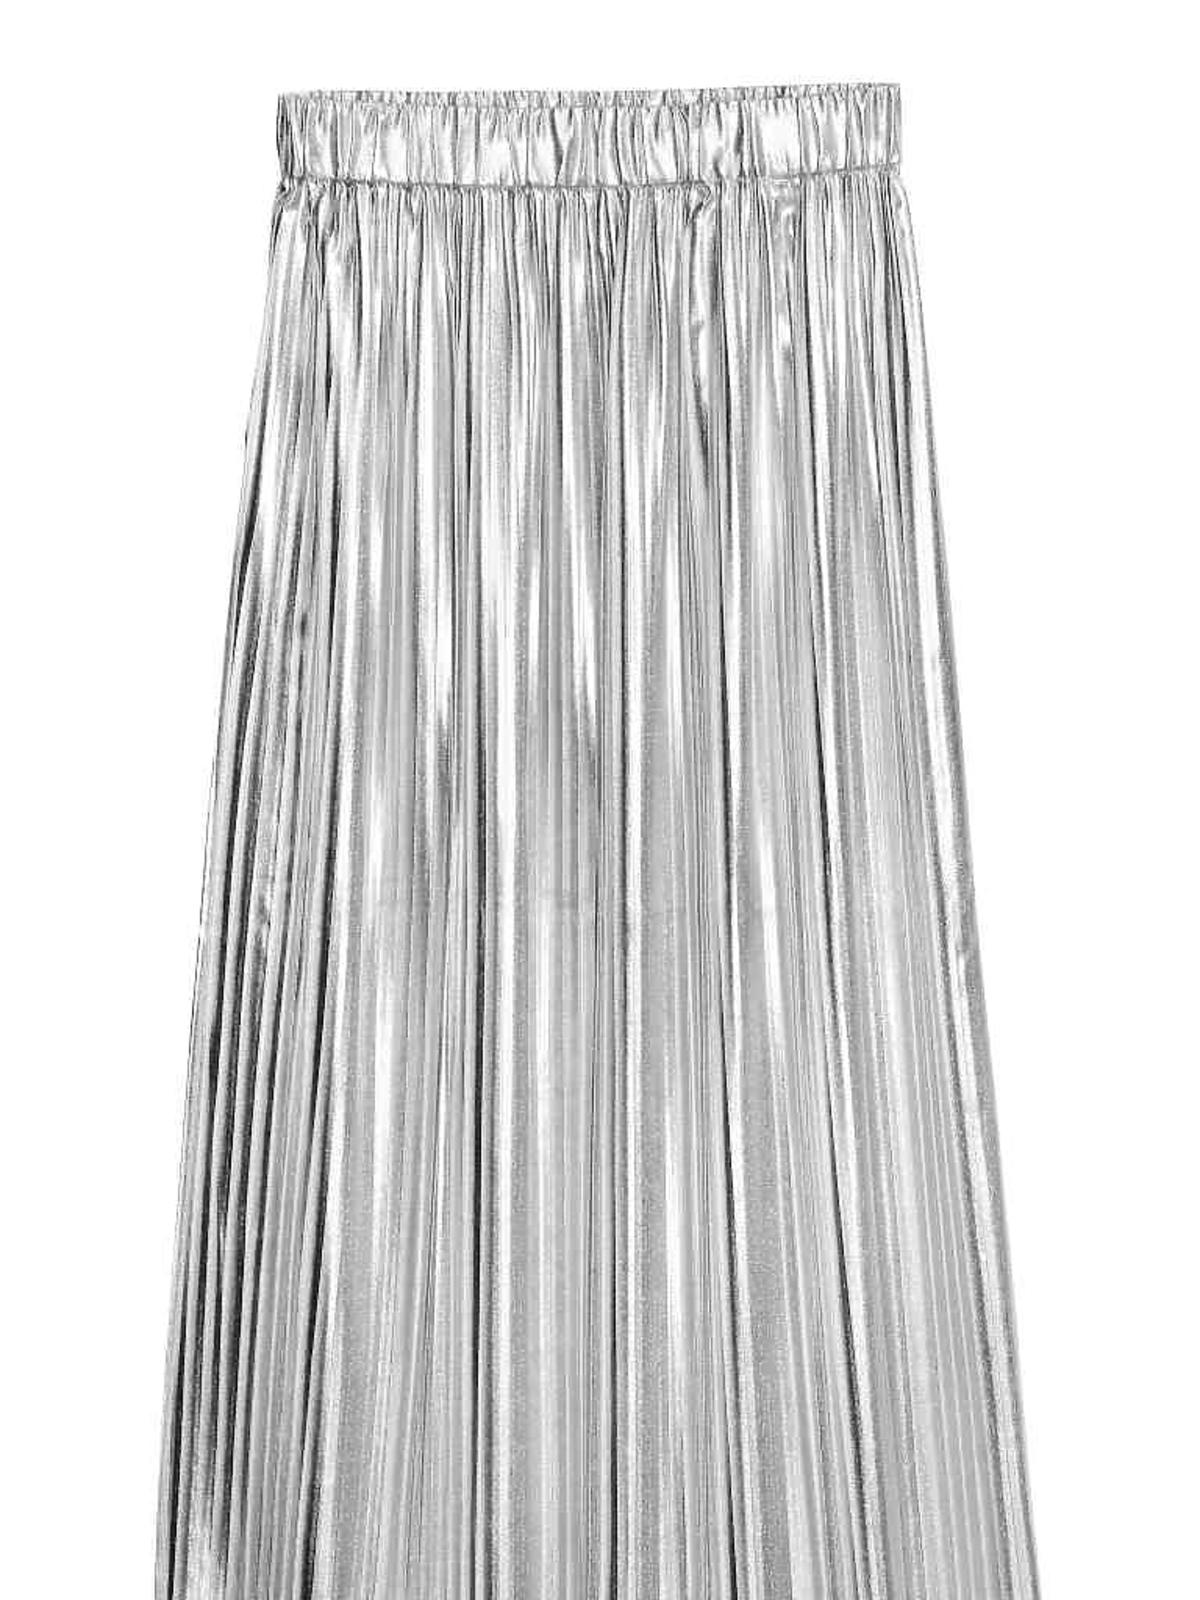 Srebrna plisowana spódnica, H&M, 69,90 zł (ze 139,90 zł)